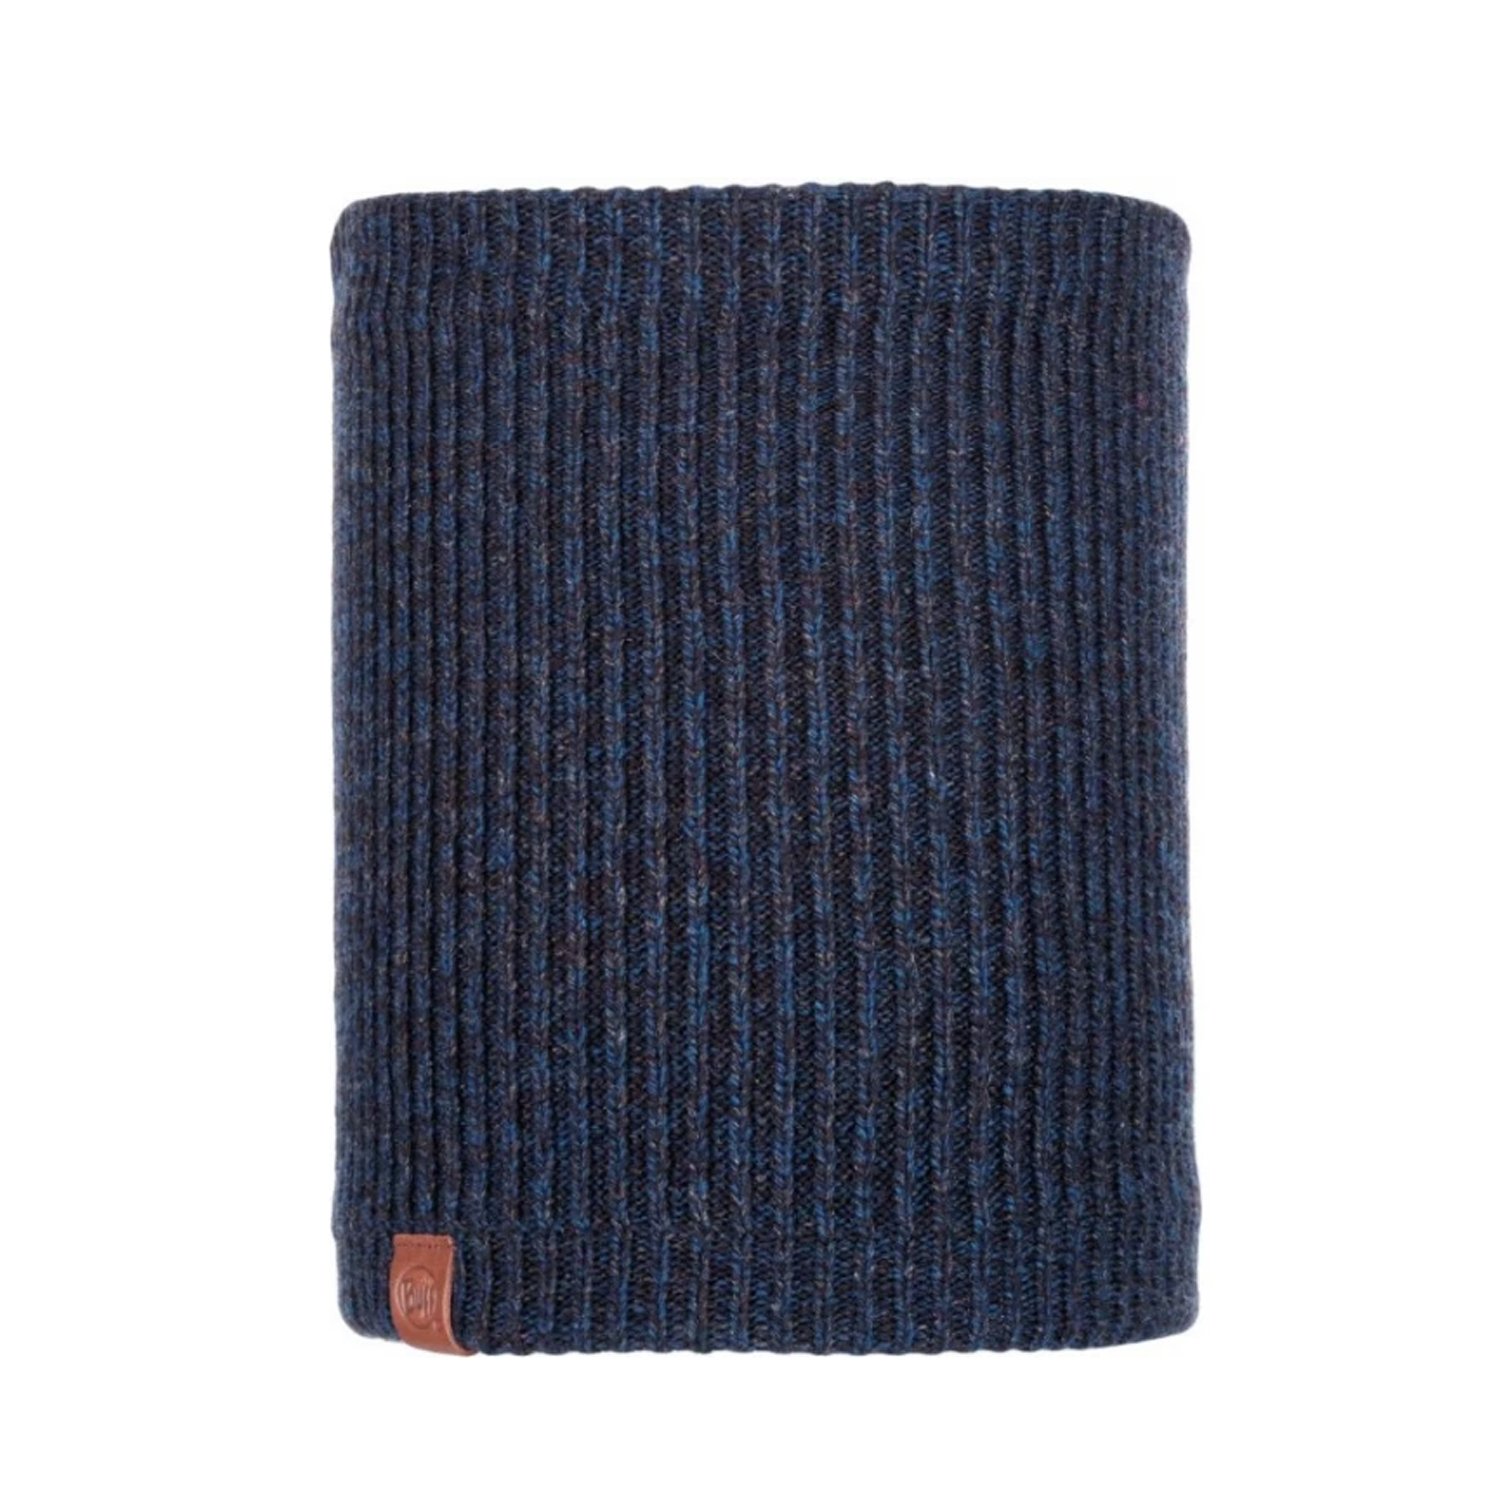 Шарф Buff Knitted & Fleece Neckwarmer Lan Lan Night, US:one size, синий, 126472.779.10.00 шарф из коллекции kamchatka